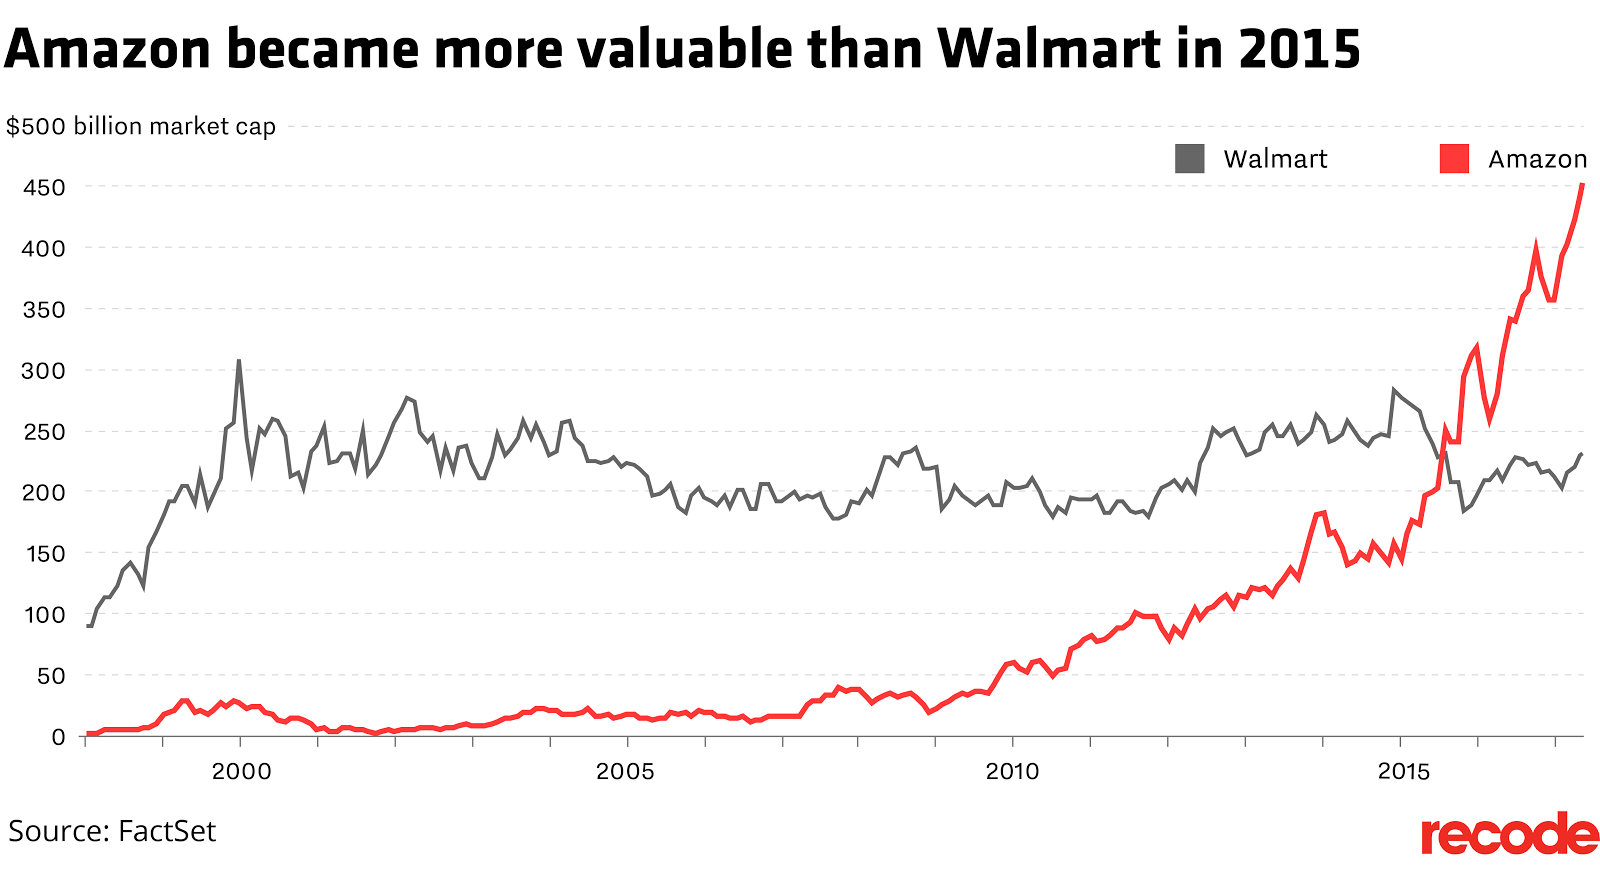 Amazon versus walmart market value 01